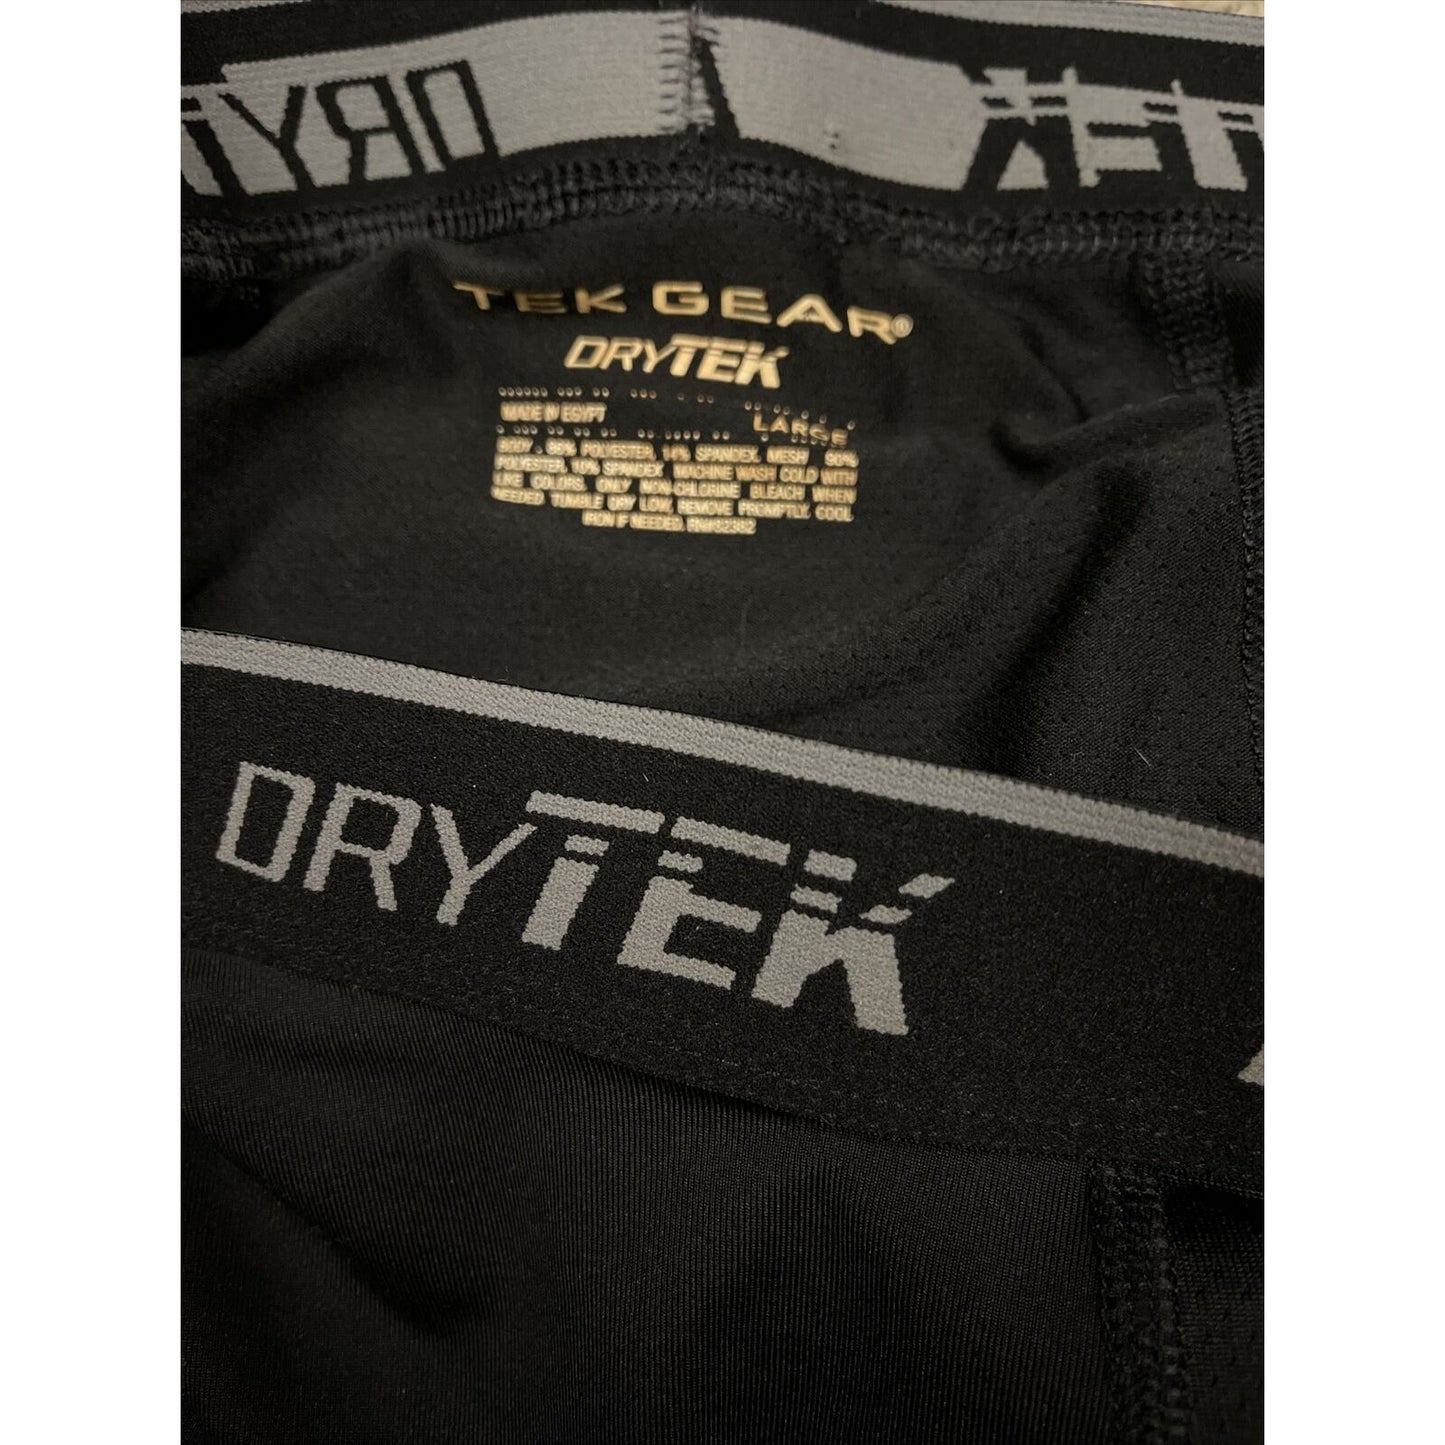 Men's Black TEK GEAR DRYTEK 3/4 BASE LAYER PANTS Black, Size LARGE